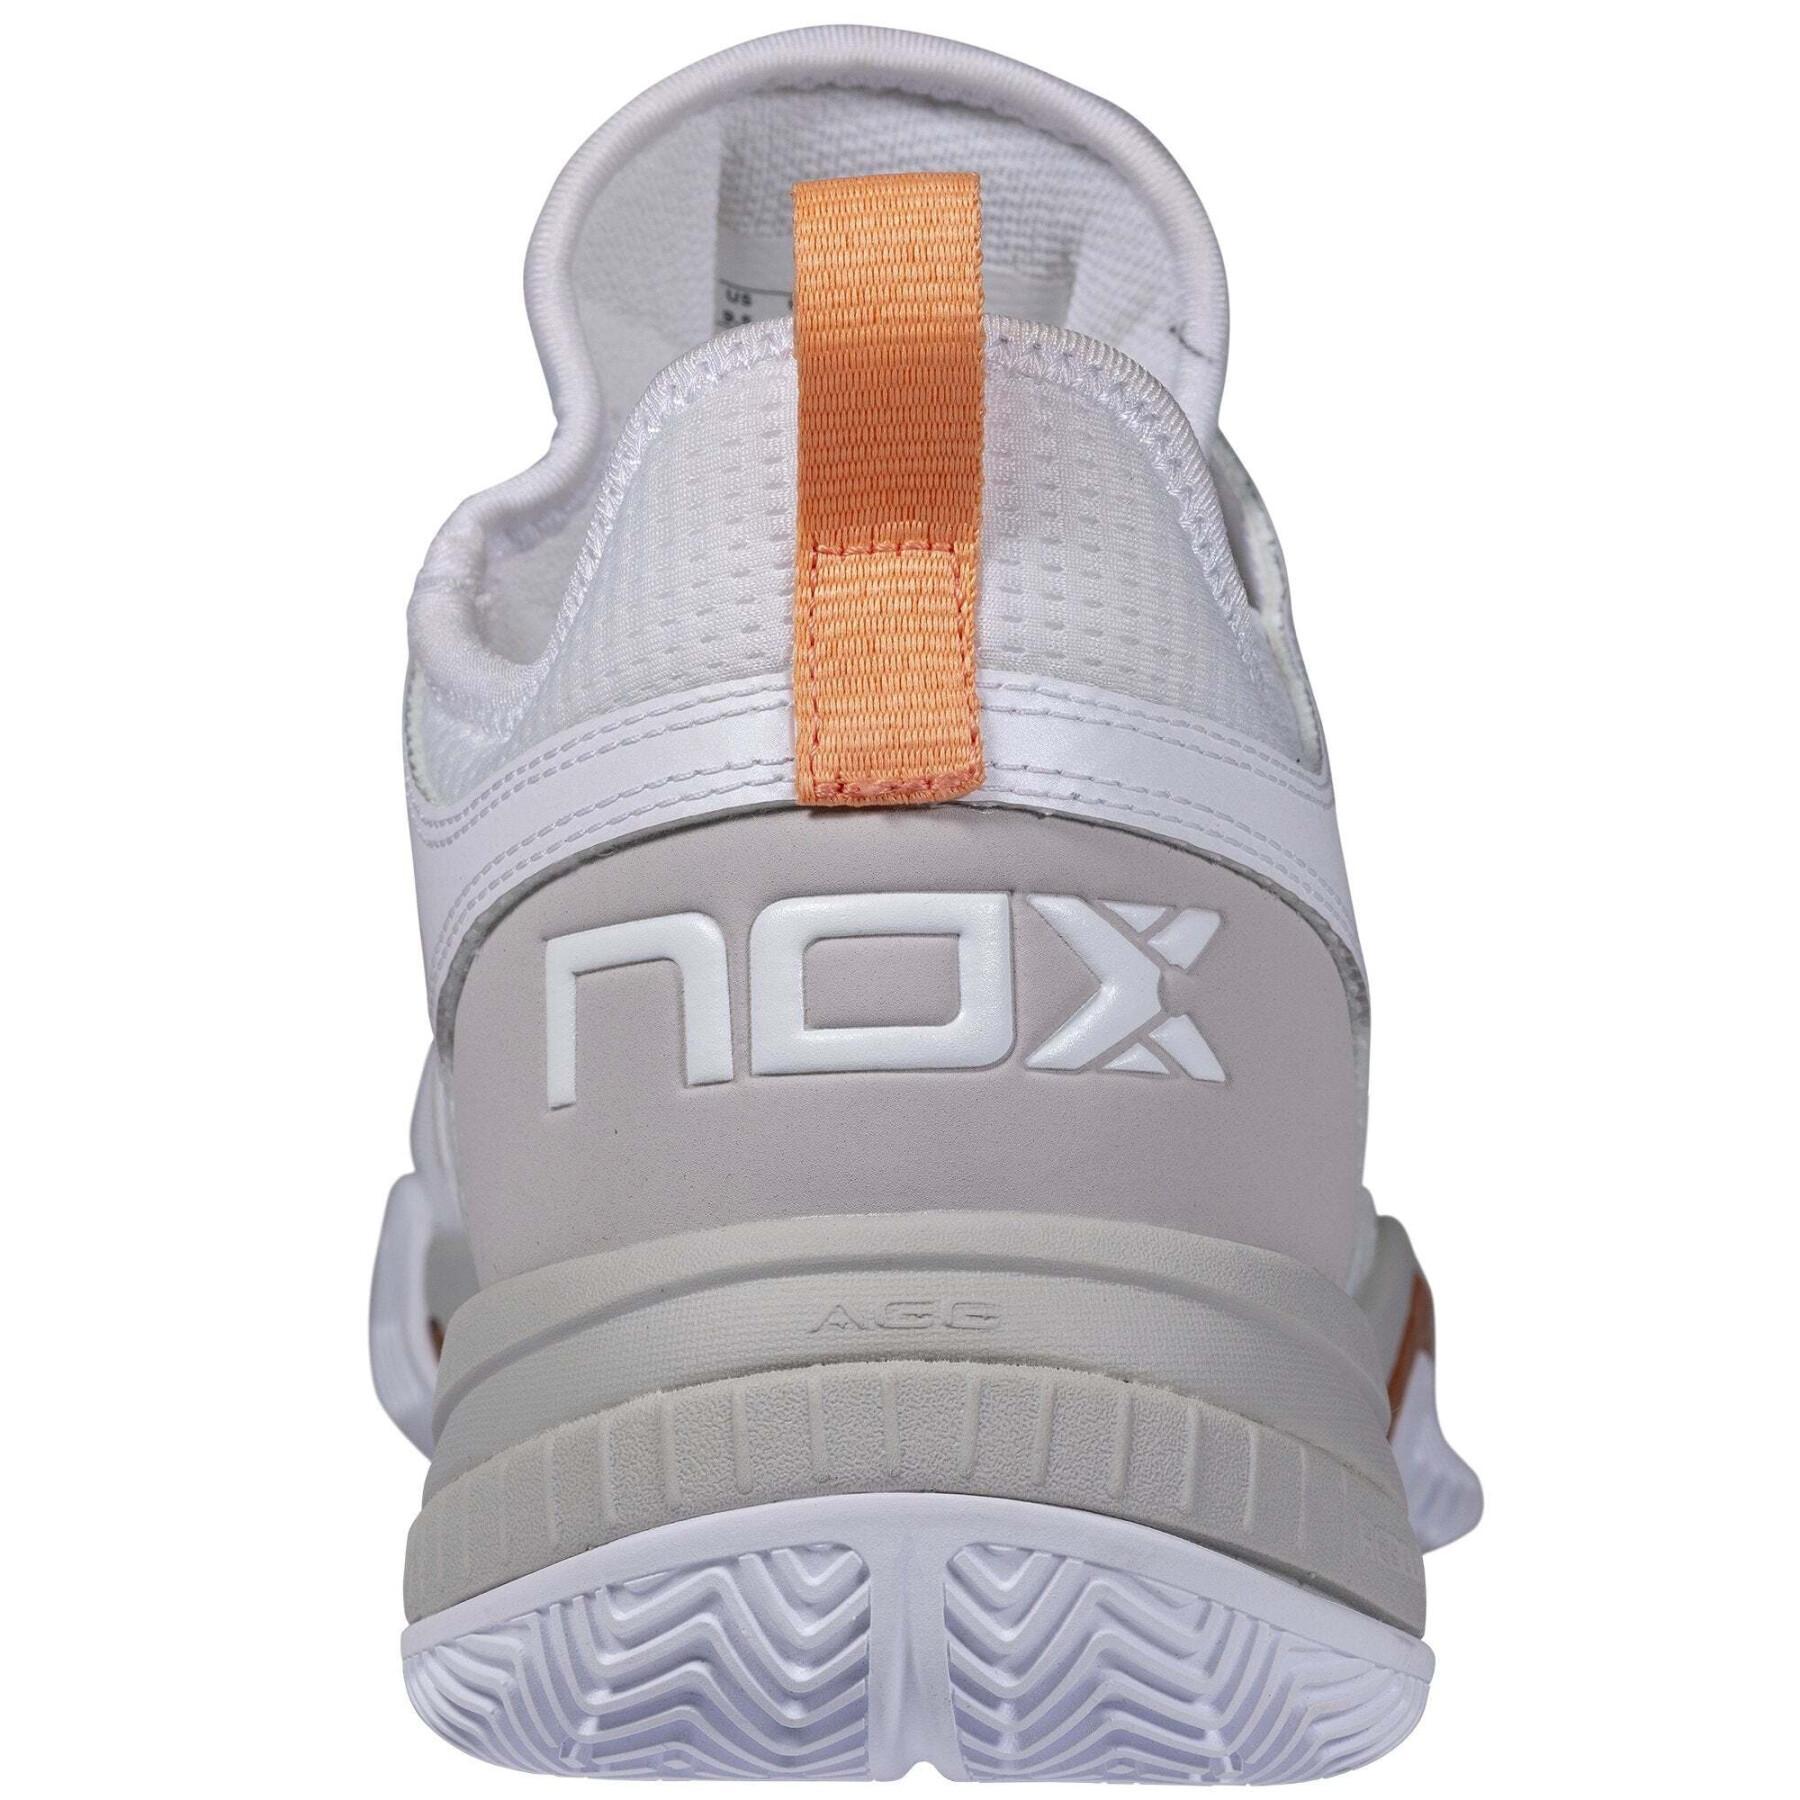 Scarpe di padel Nox Calzado Lux Nerbo